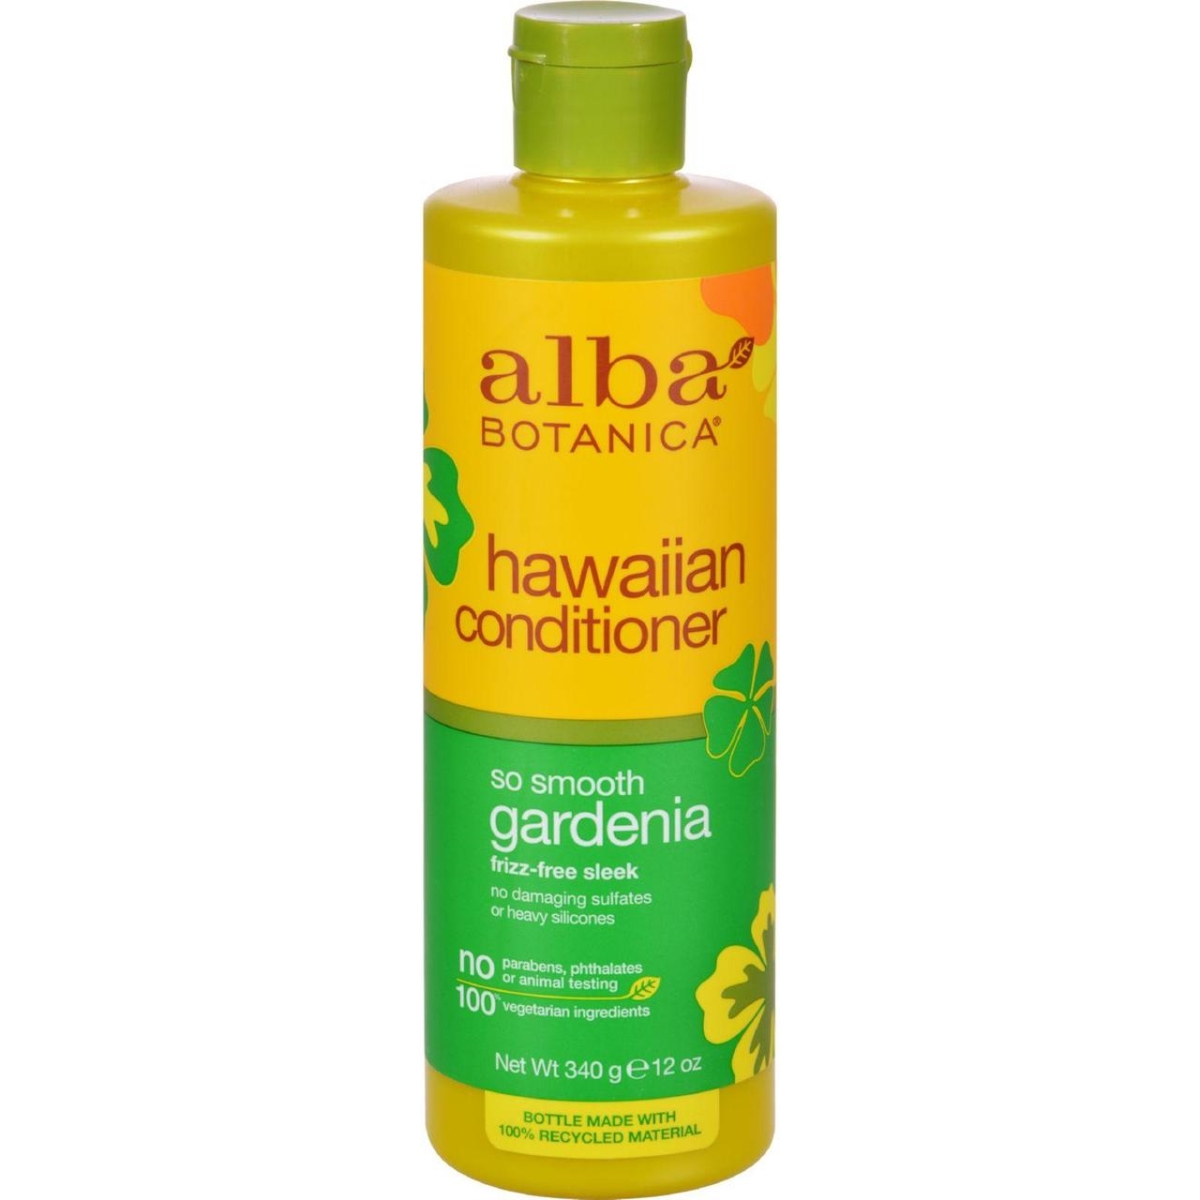 Hg0596510 12 Fl Oz Hawaiian Hair Conditioner Gardenia Hydrating